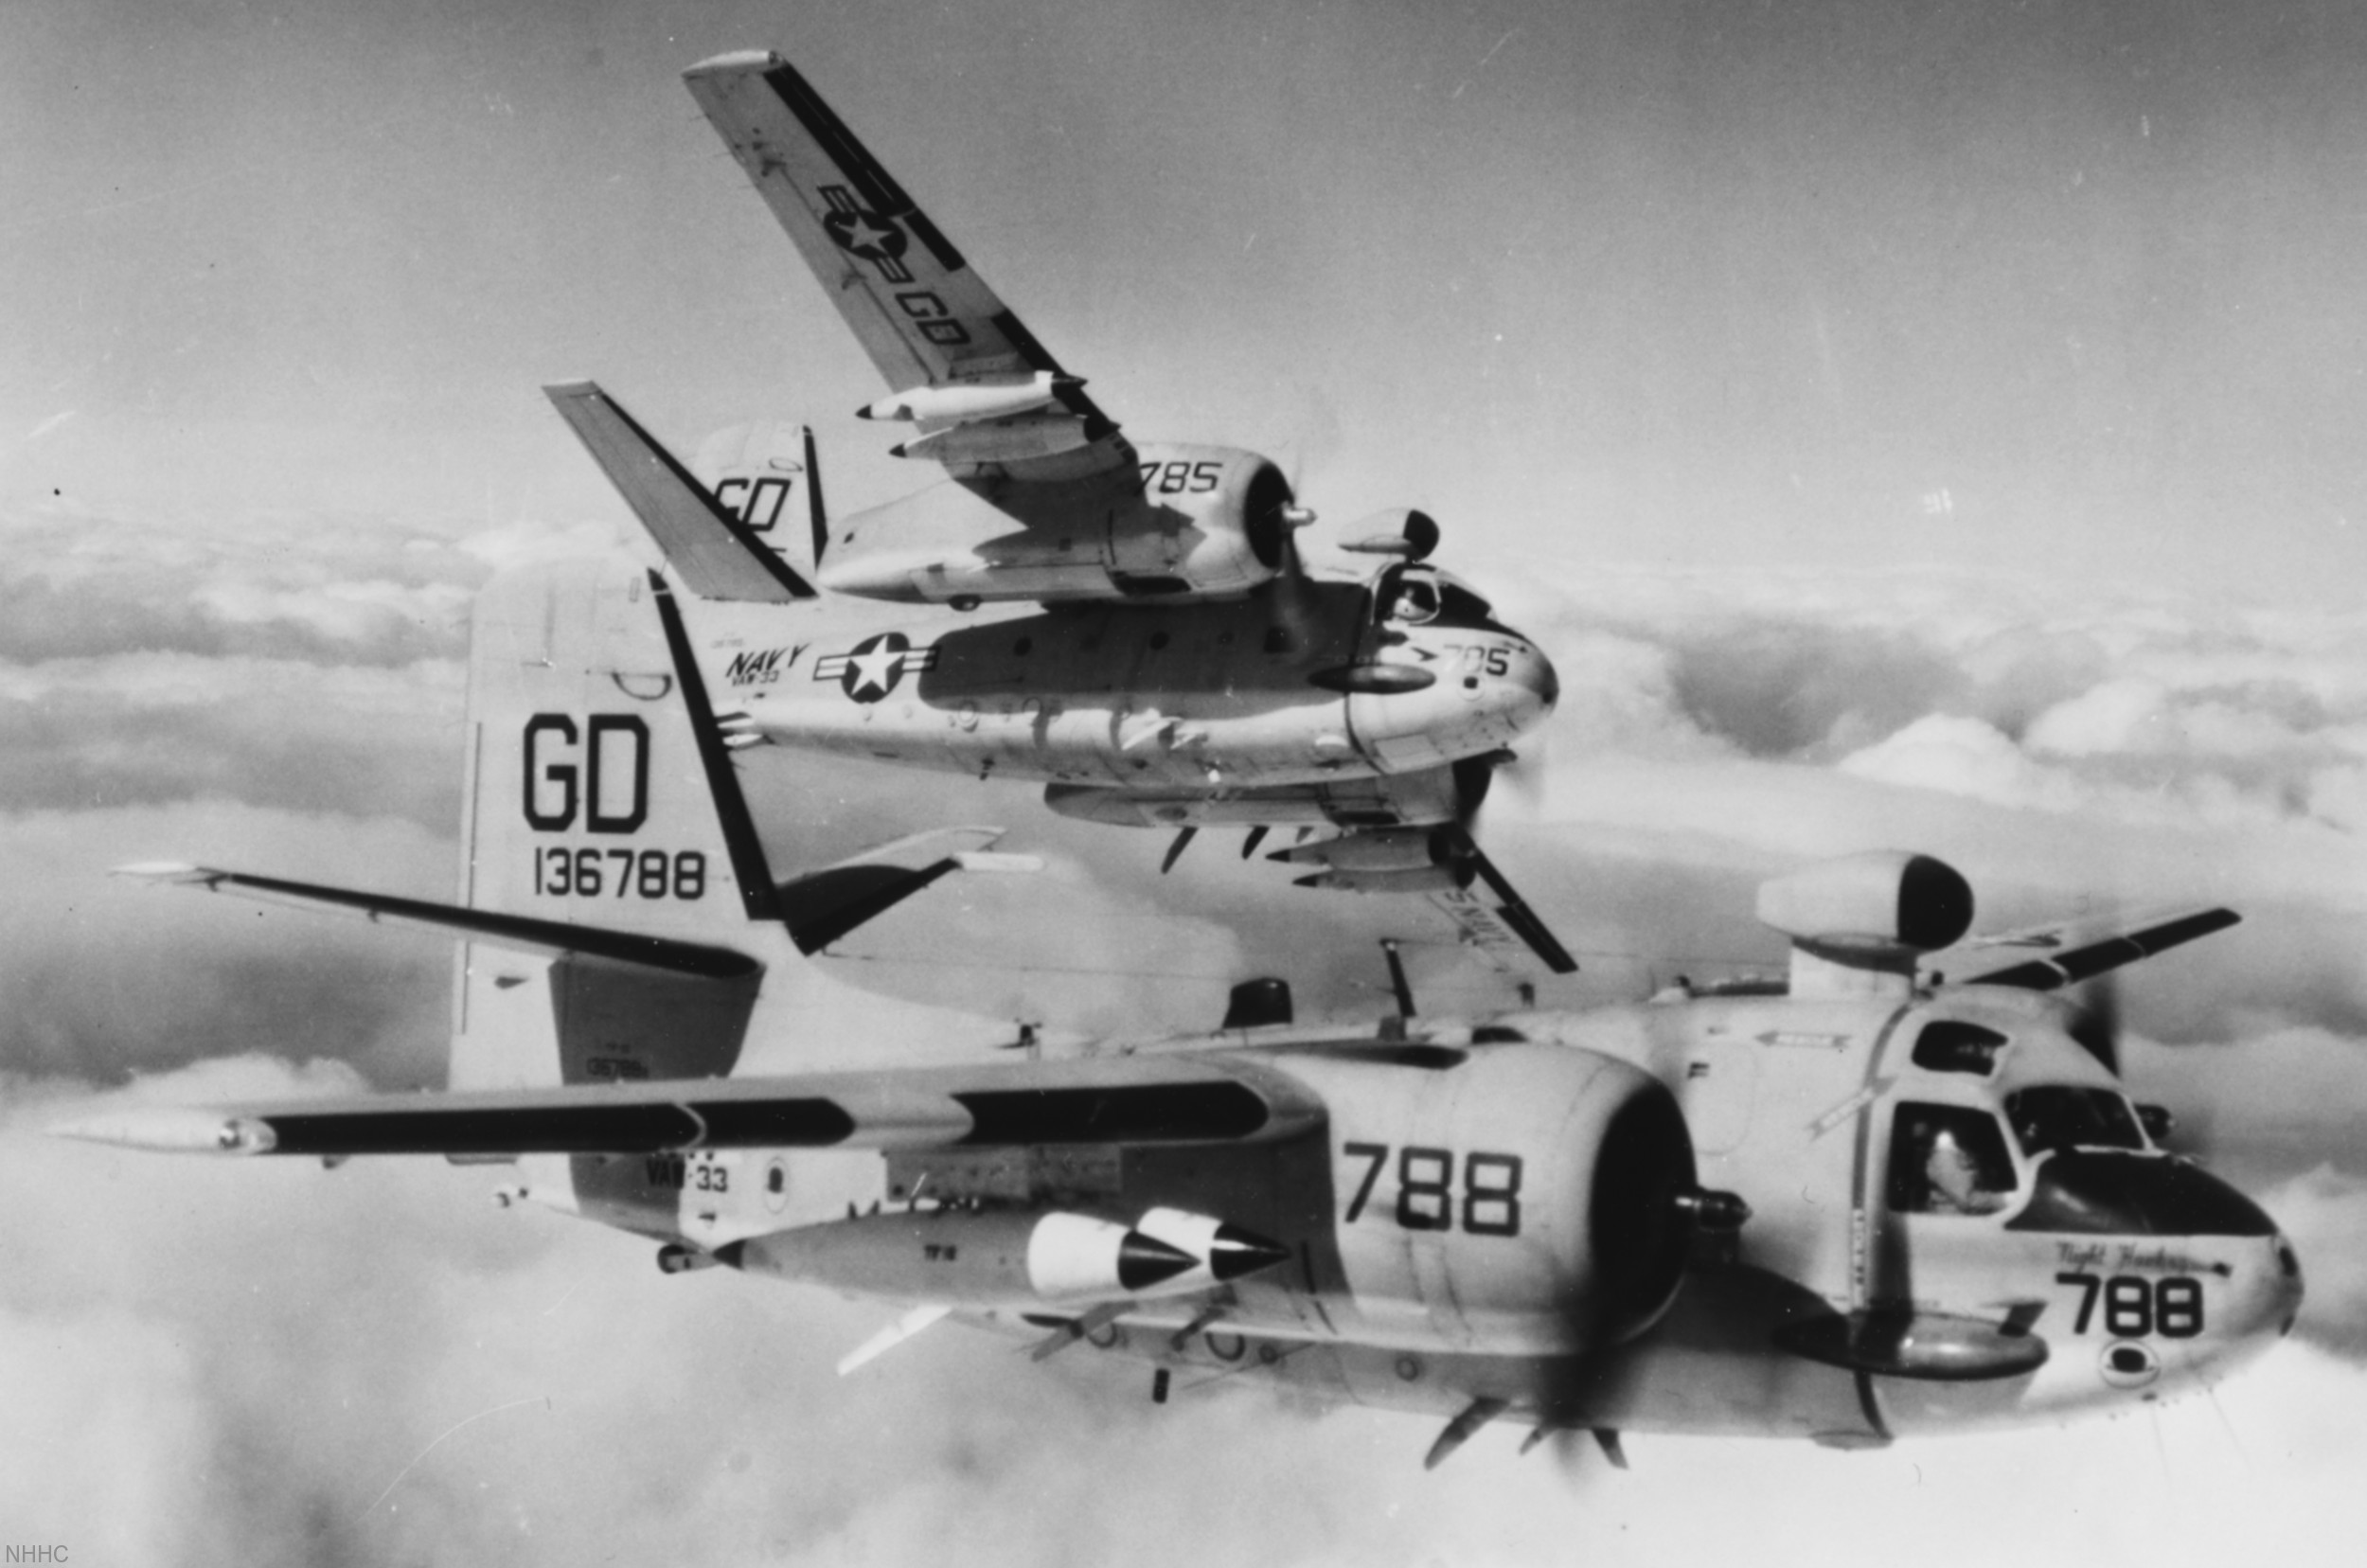 vaw-33 nighthawks carrier airborne early warning squadron caraewron us navy grumman ec-1a electric trader 04